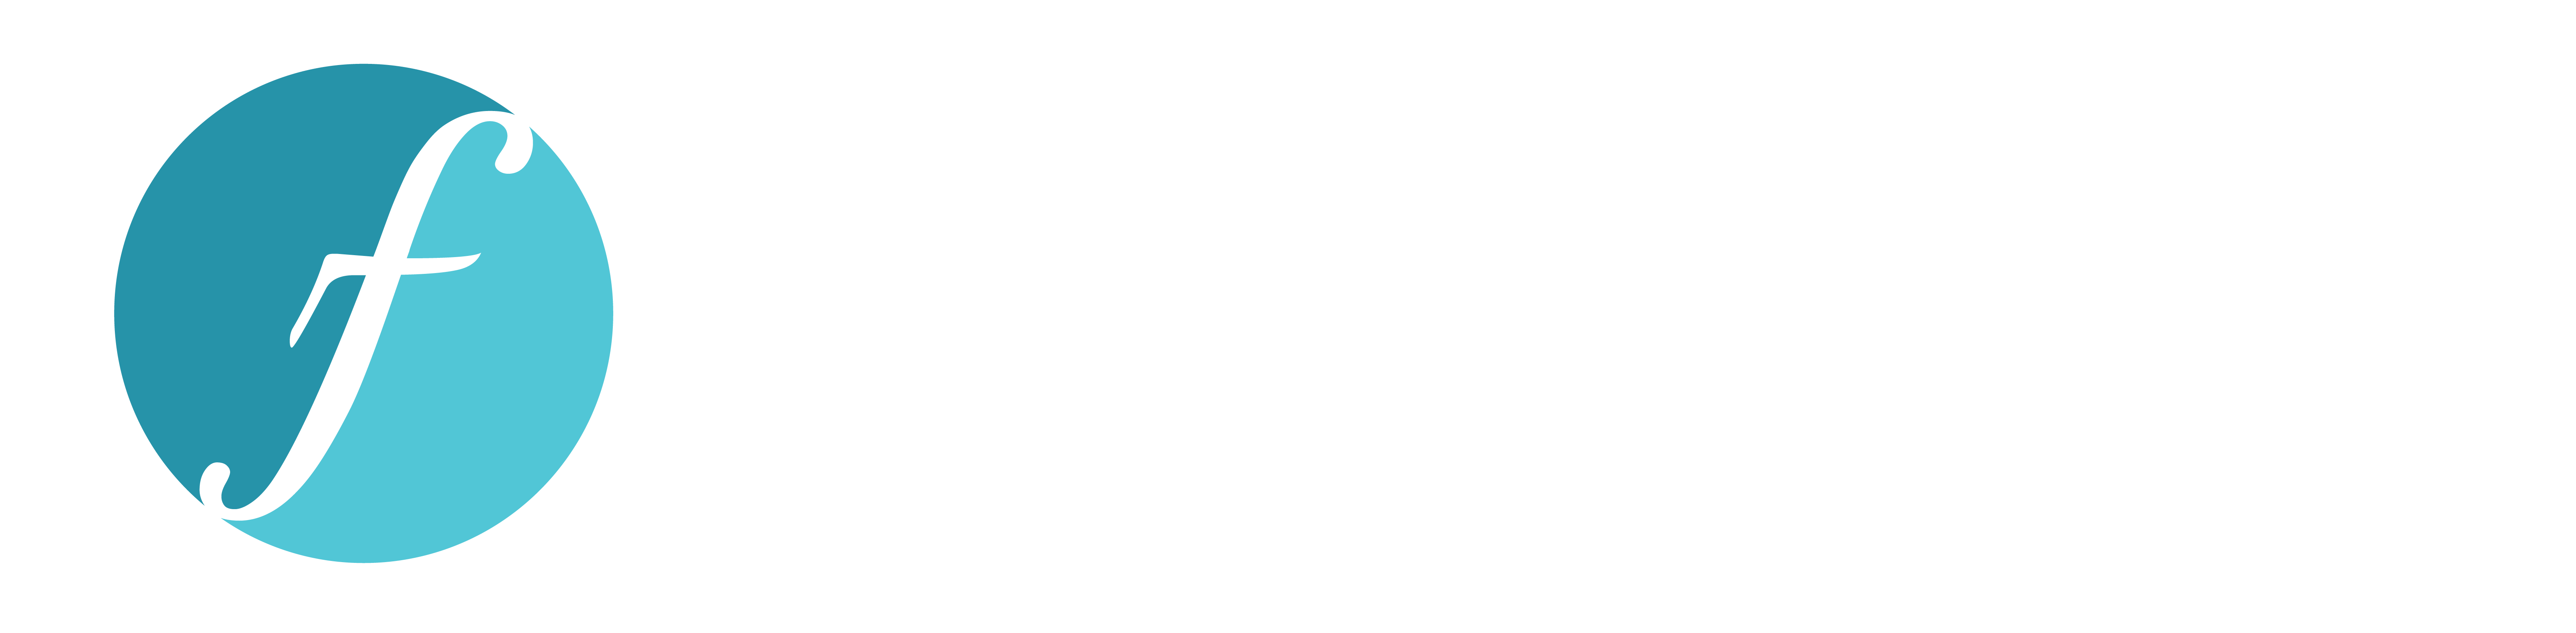 felicity brigham visual design